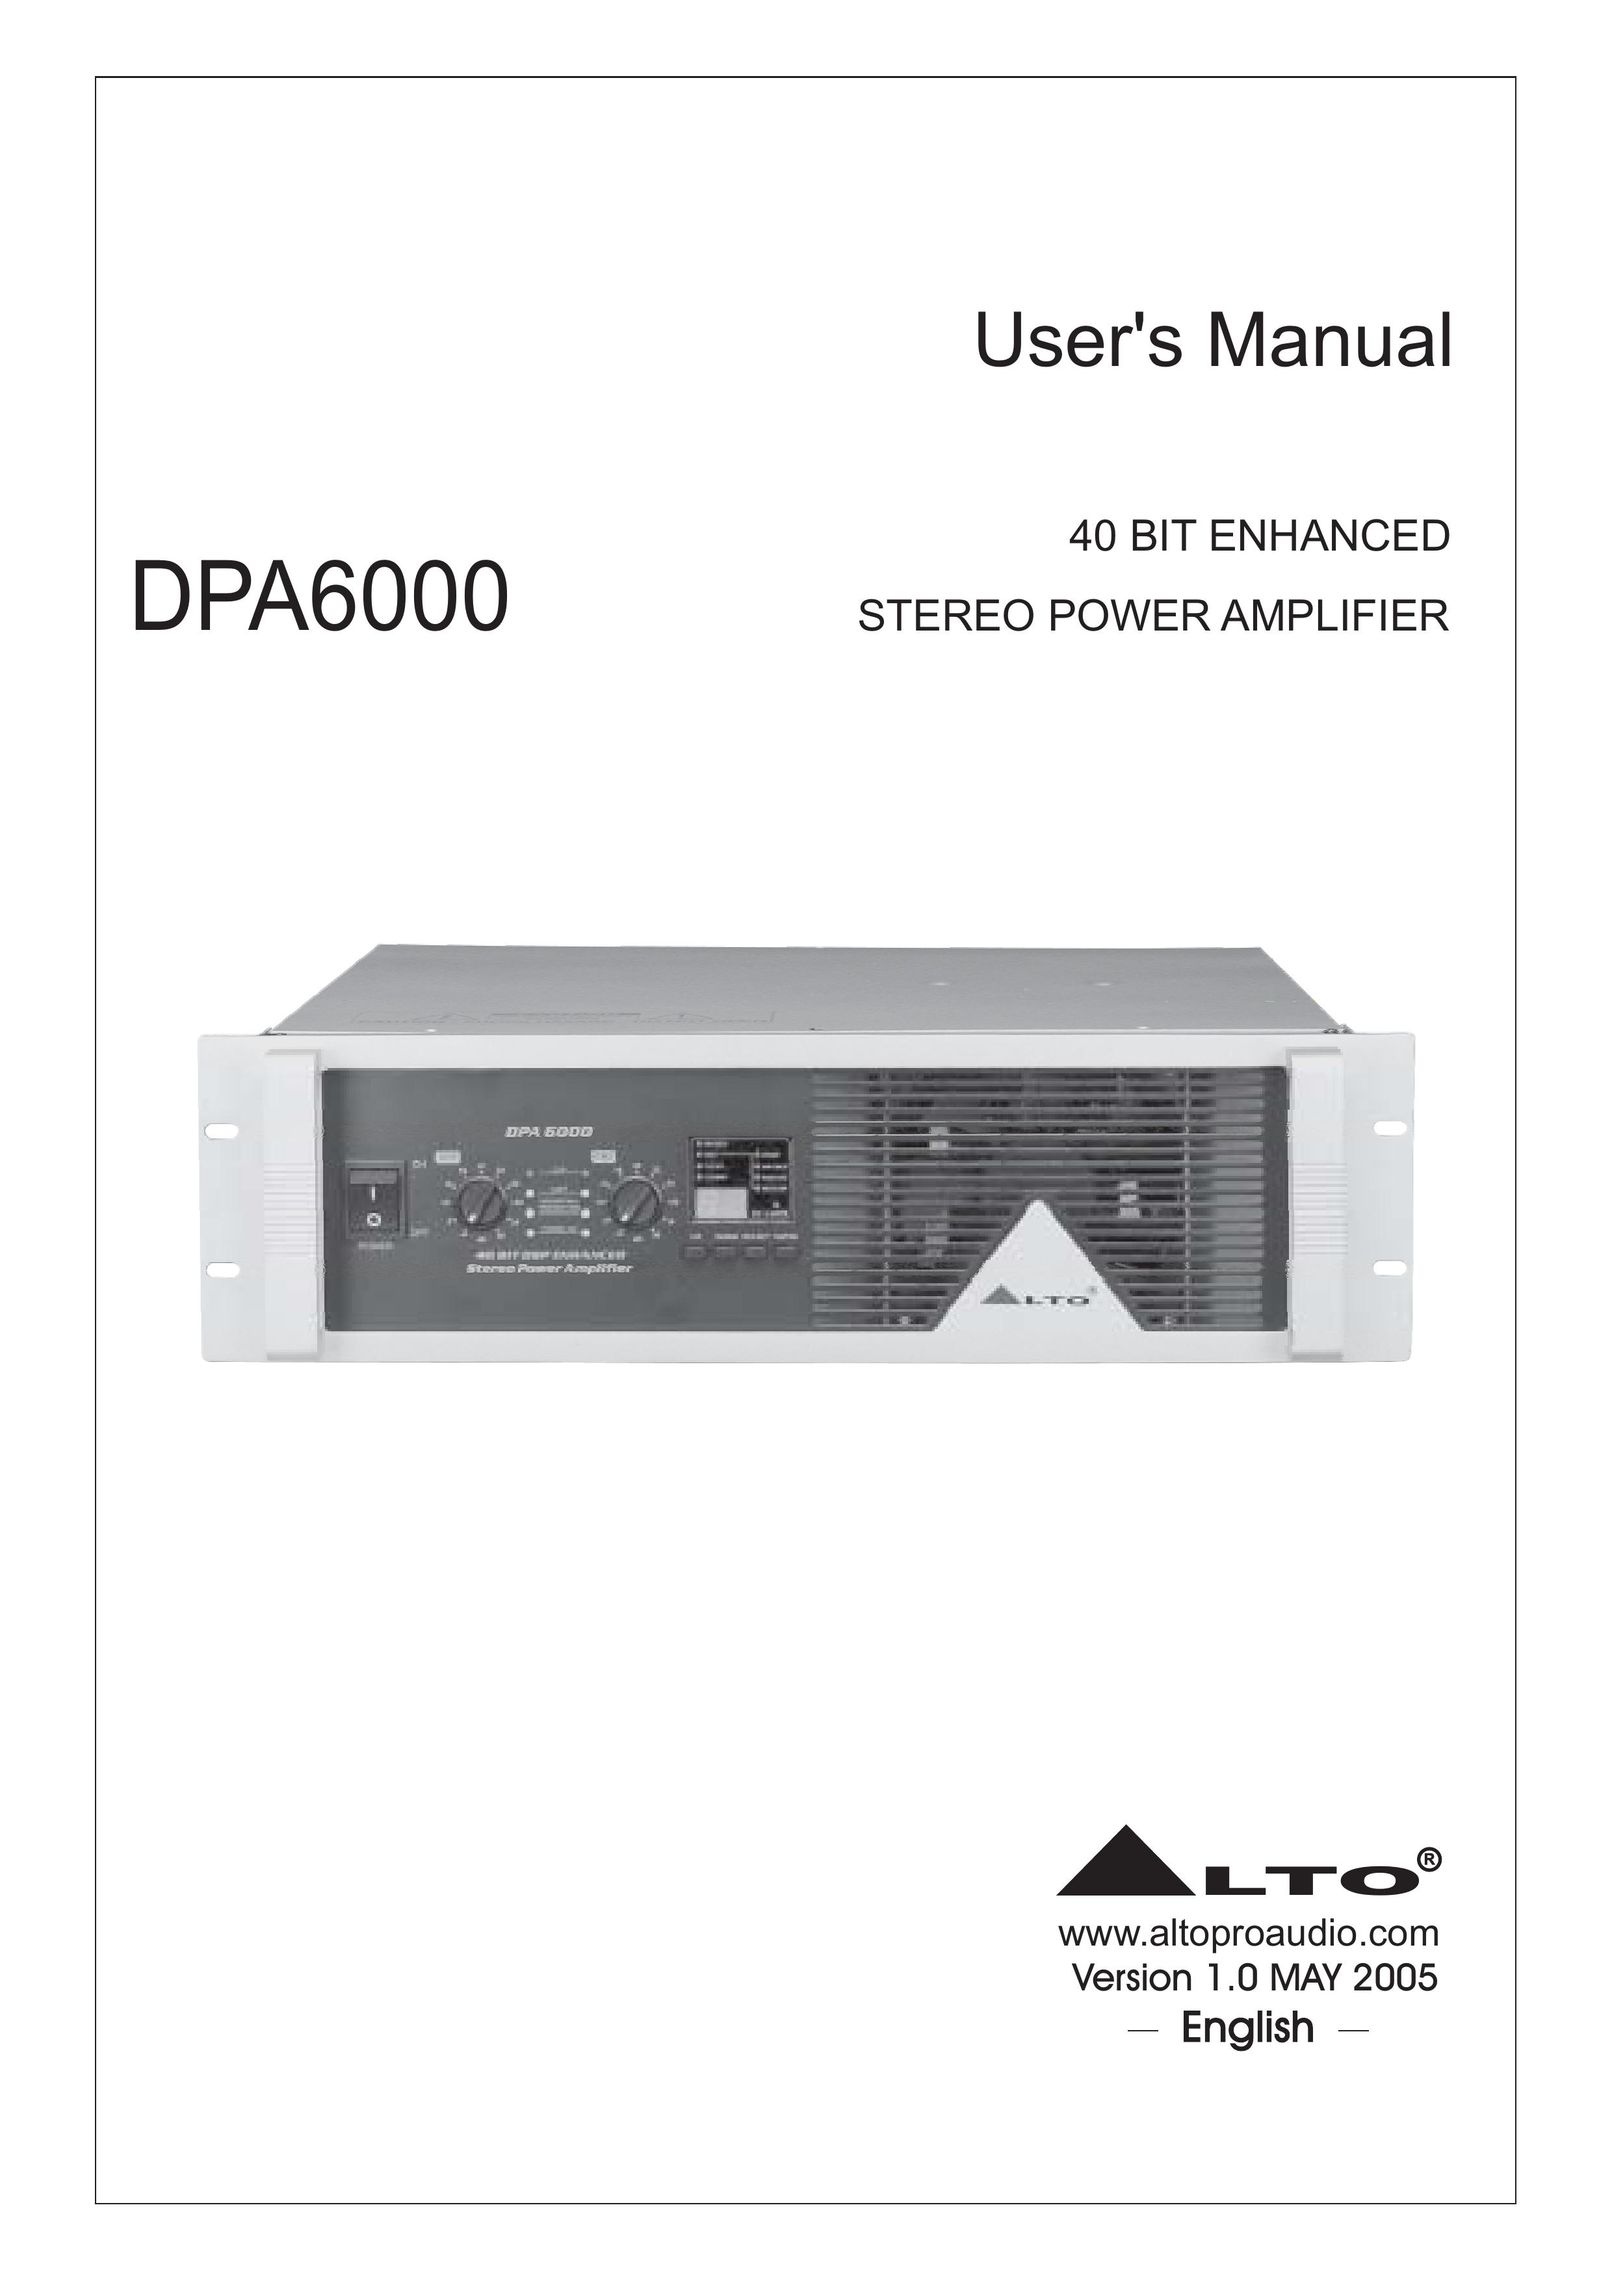 Nilfisk-ALTO DPA6000 Stereo Amplifier User Manual